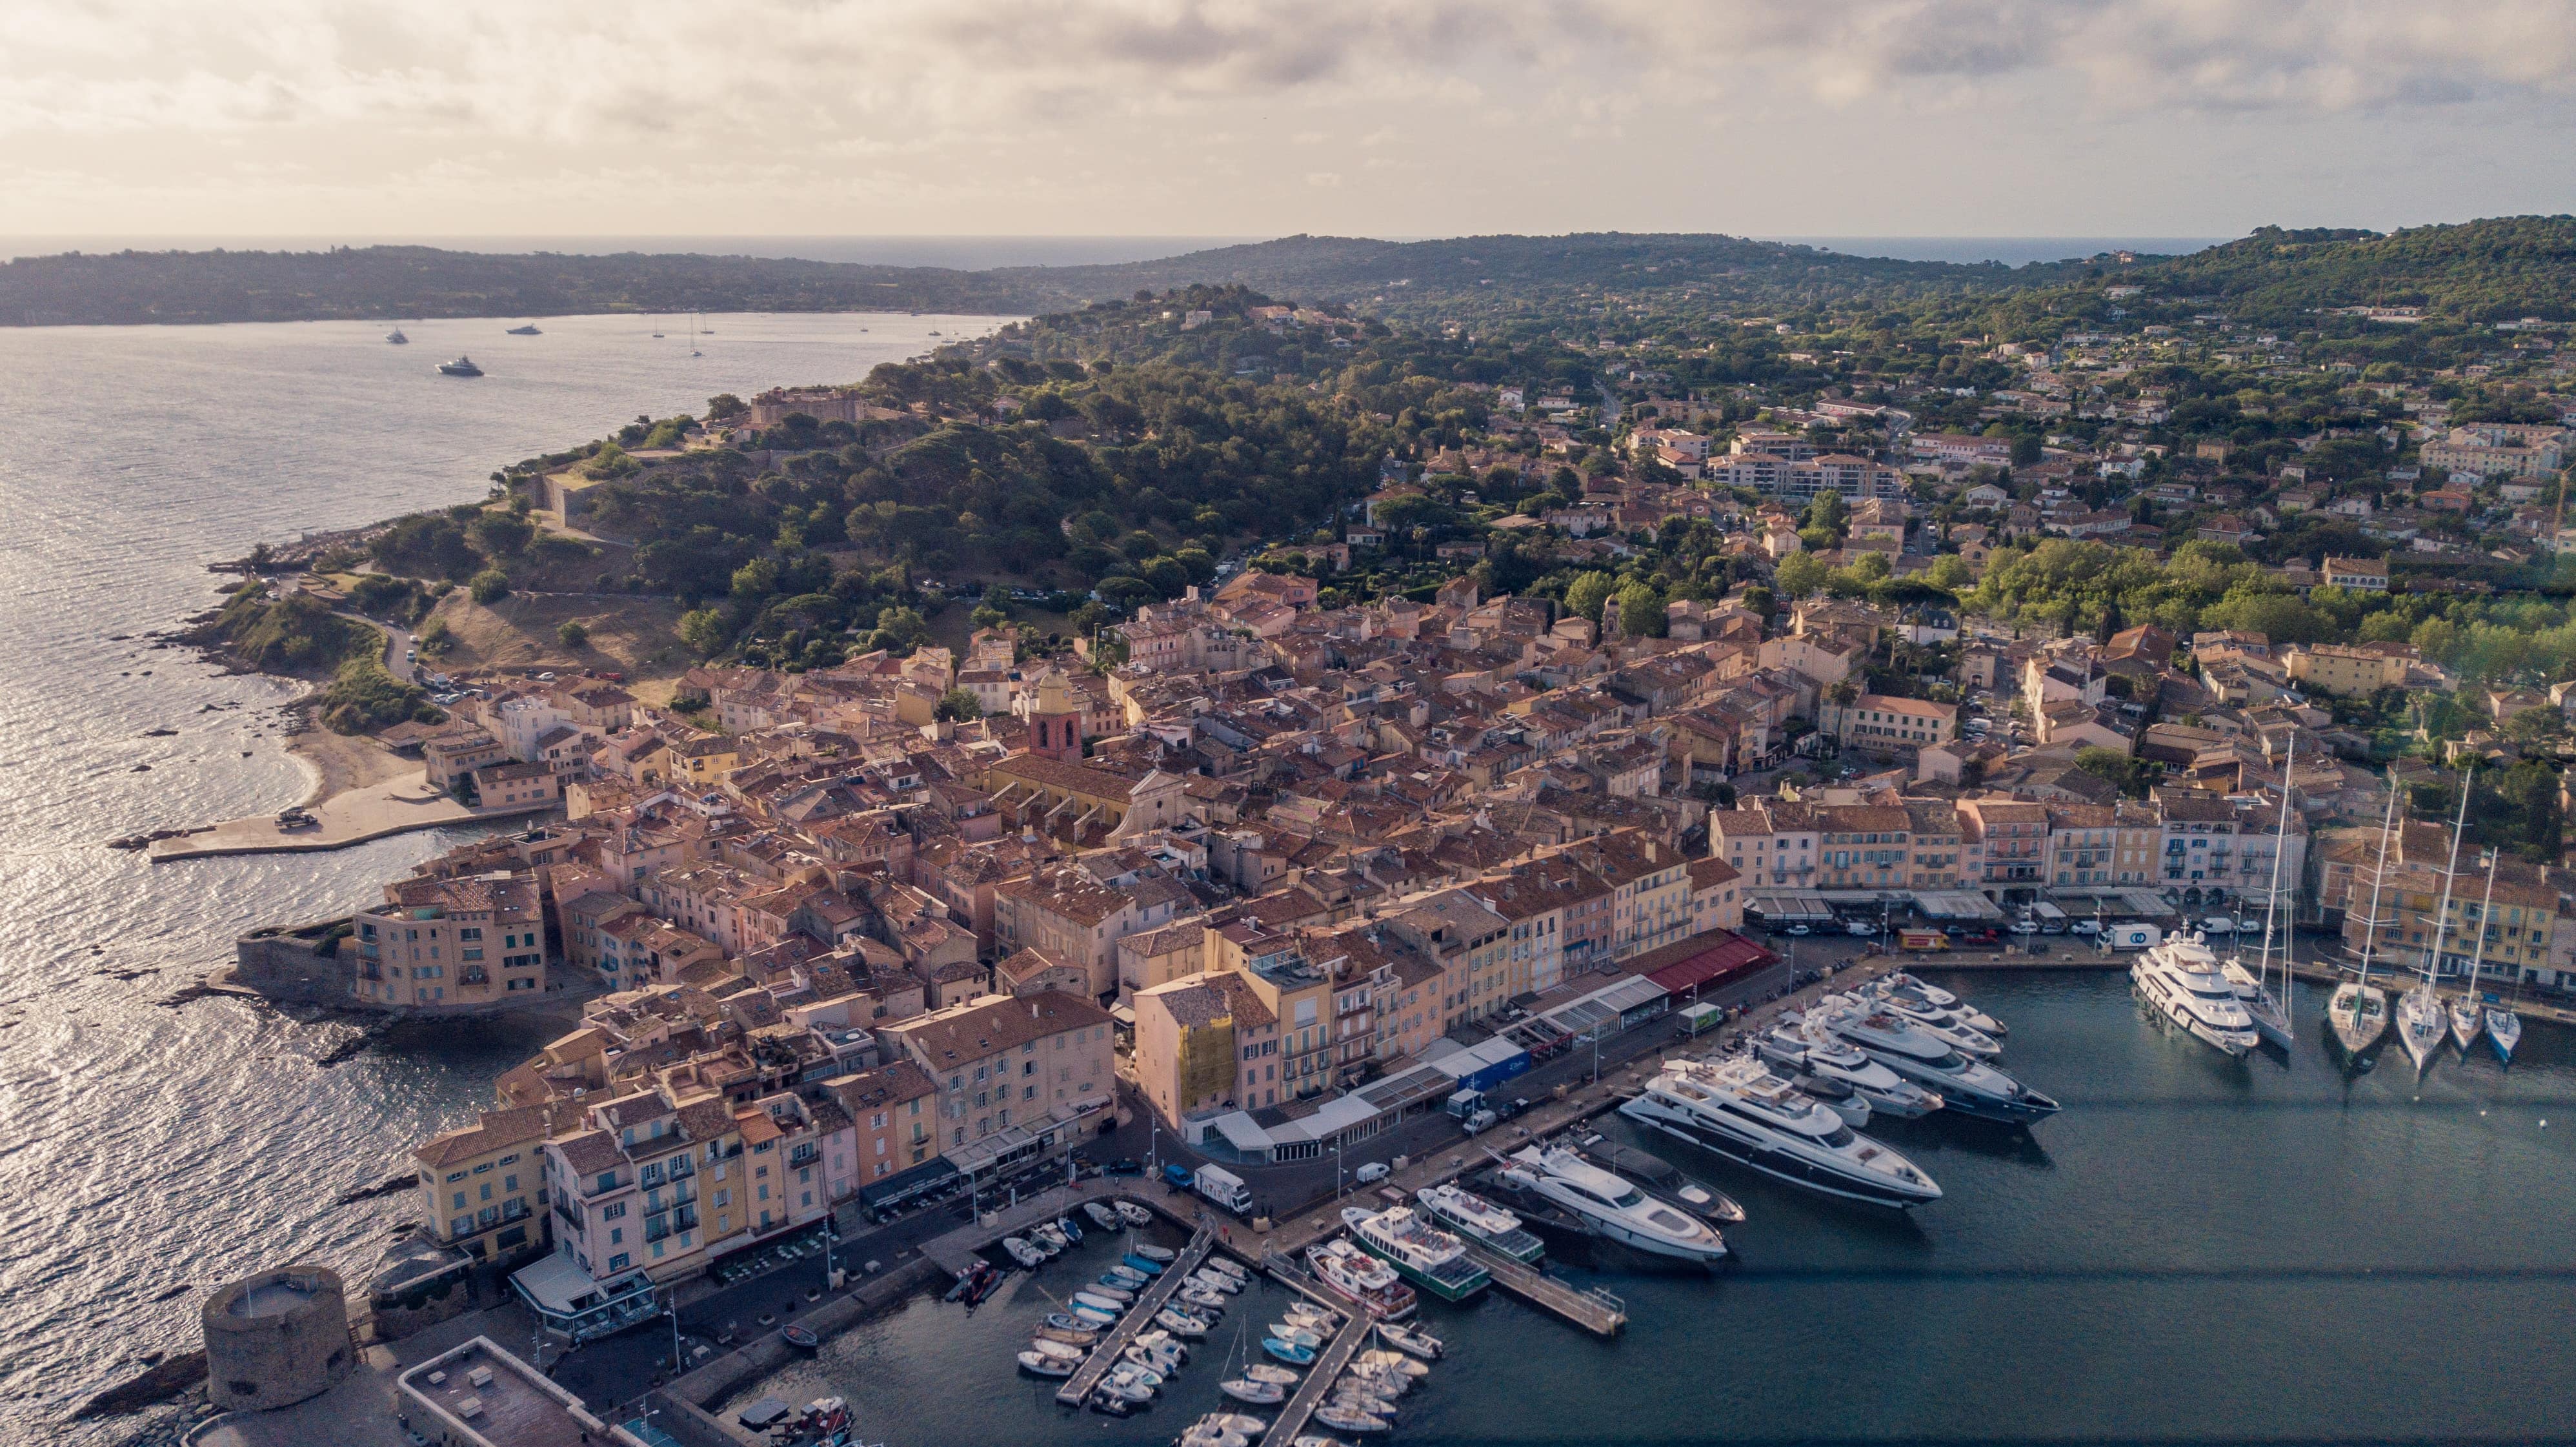  Aerial view of Saint Tropez, photo by Valentin B. Kremer on Unsplash